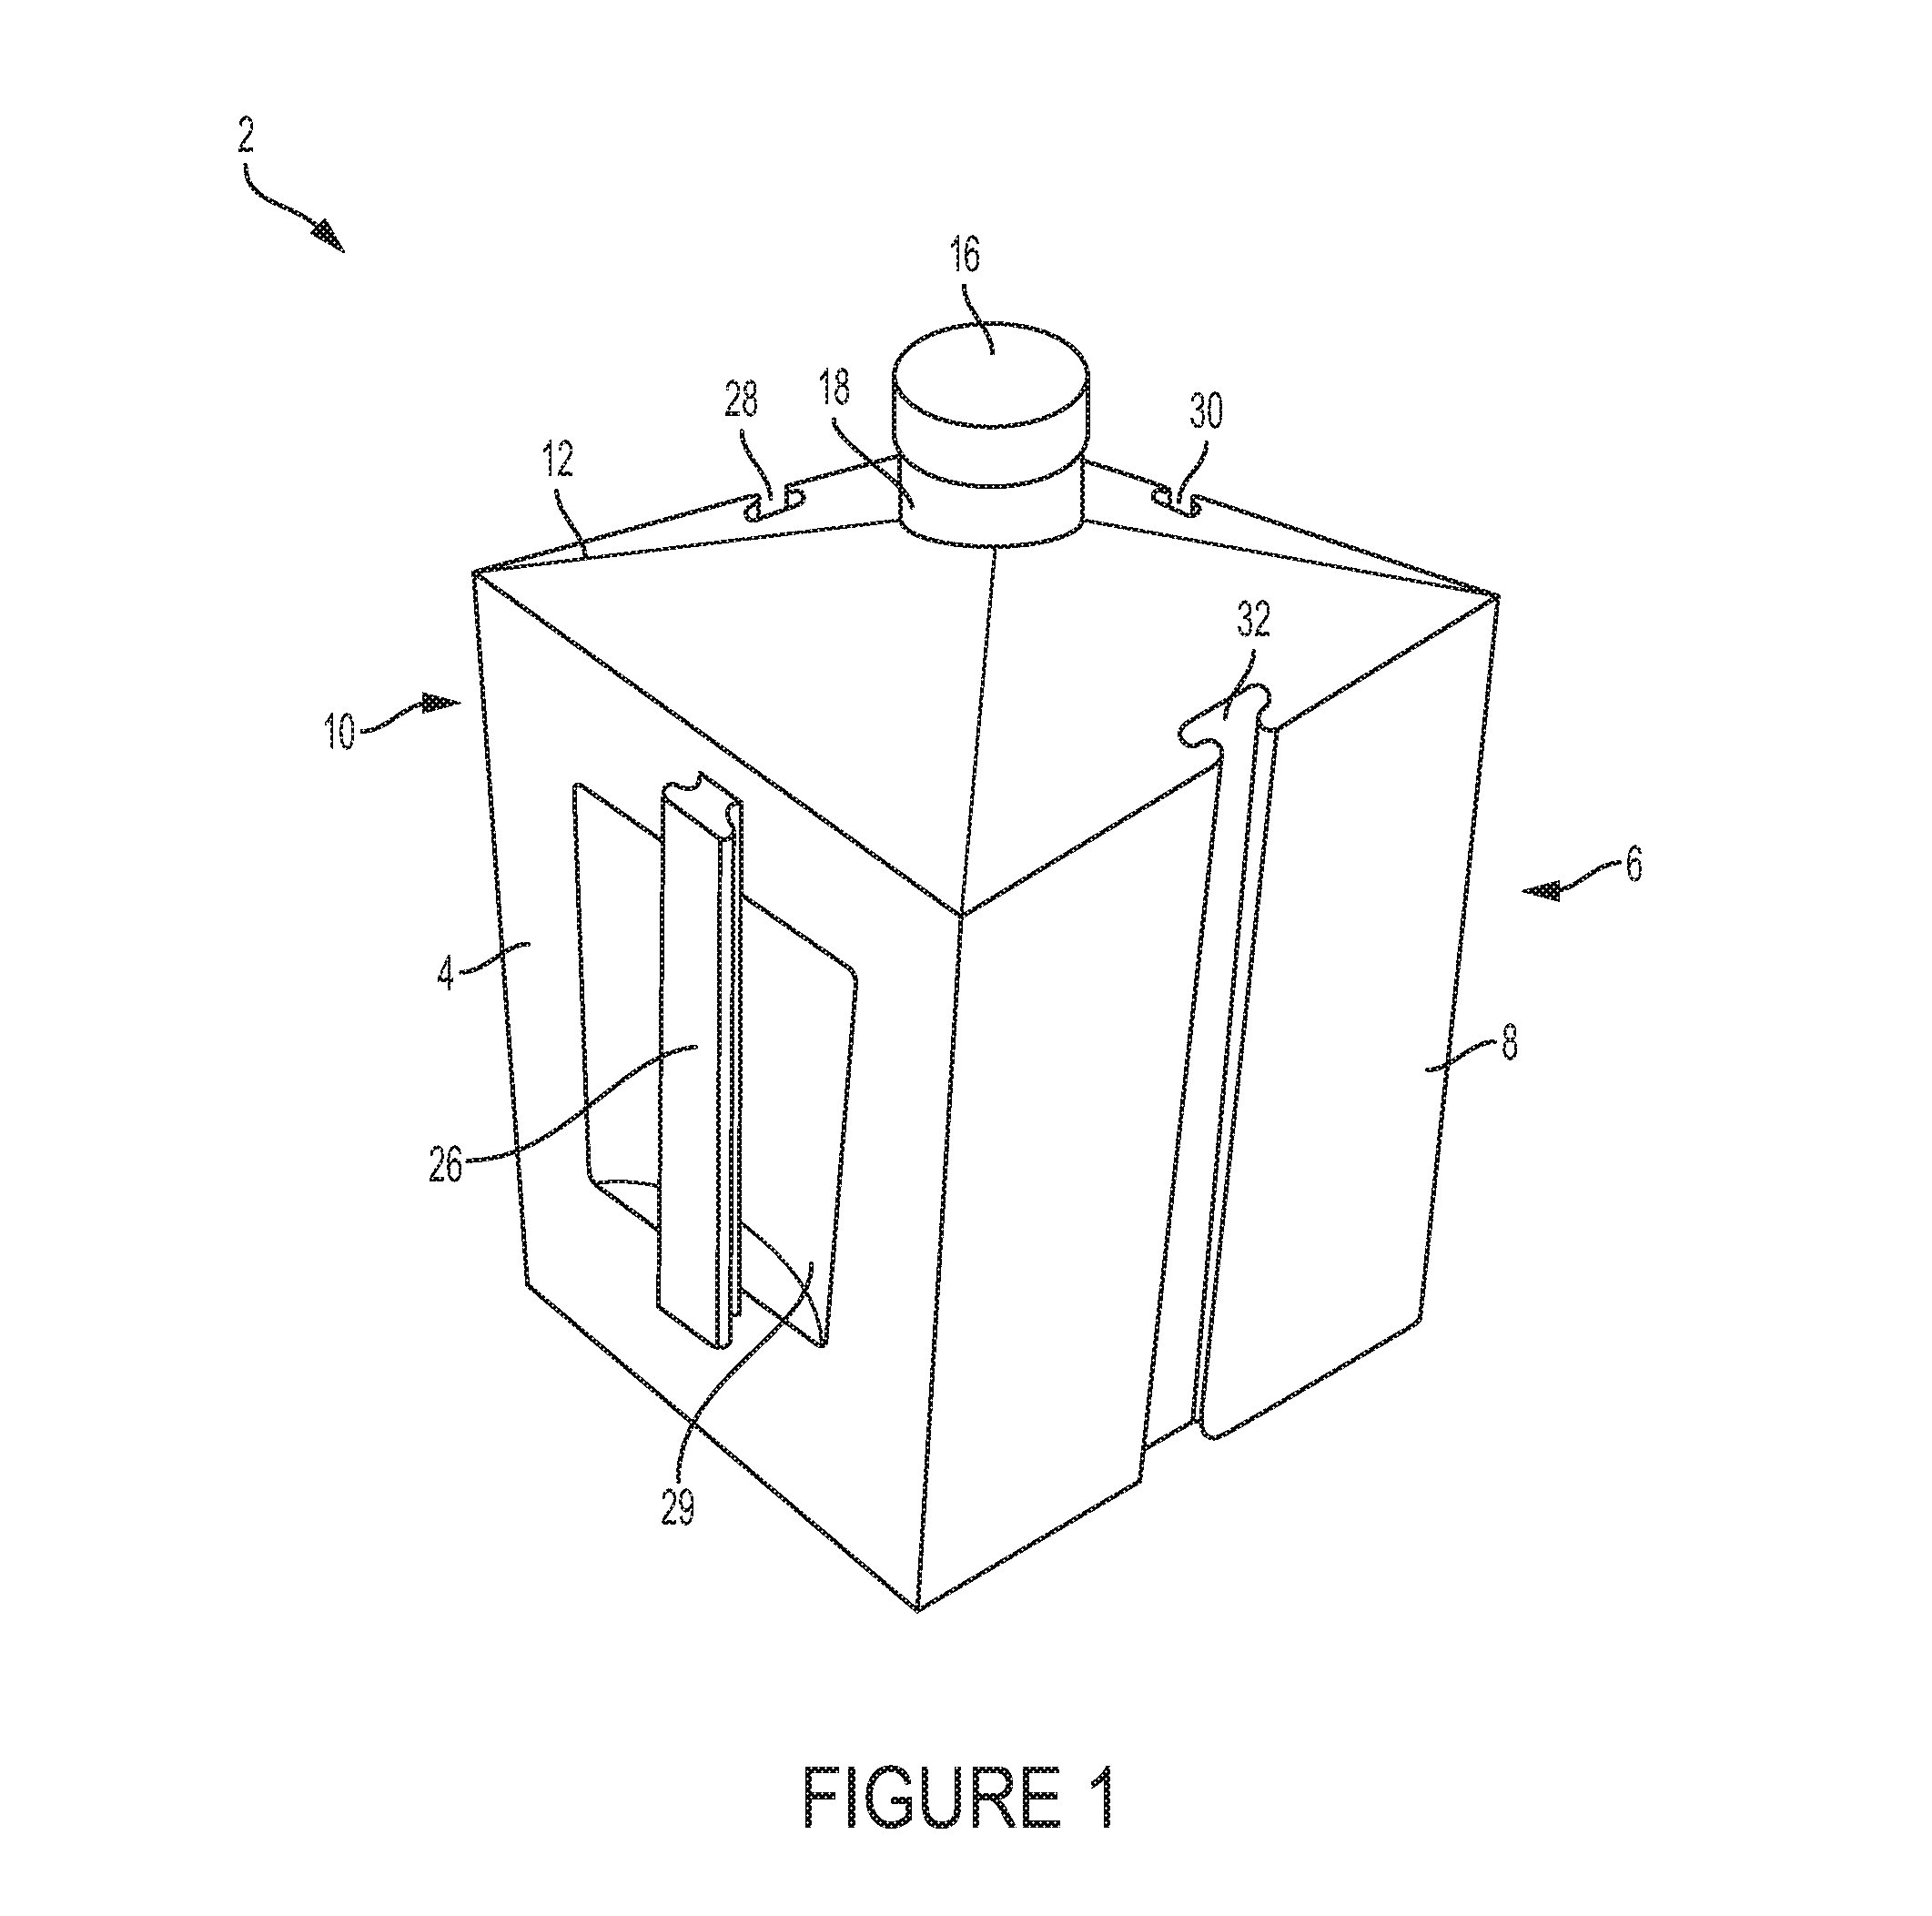 Modular interlocking containers